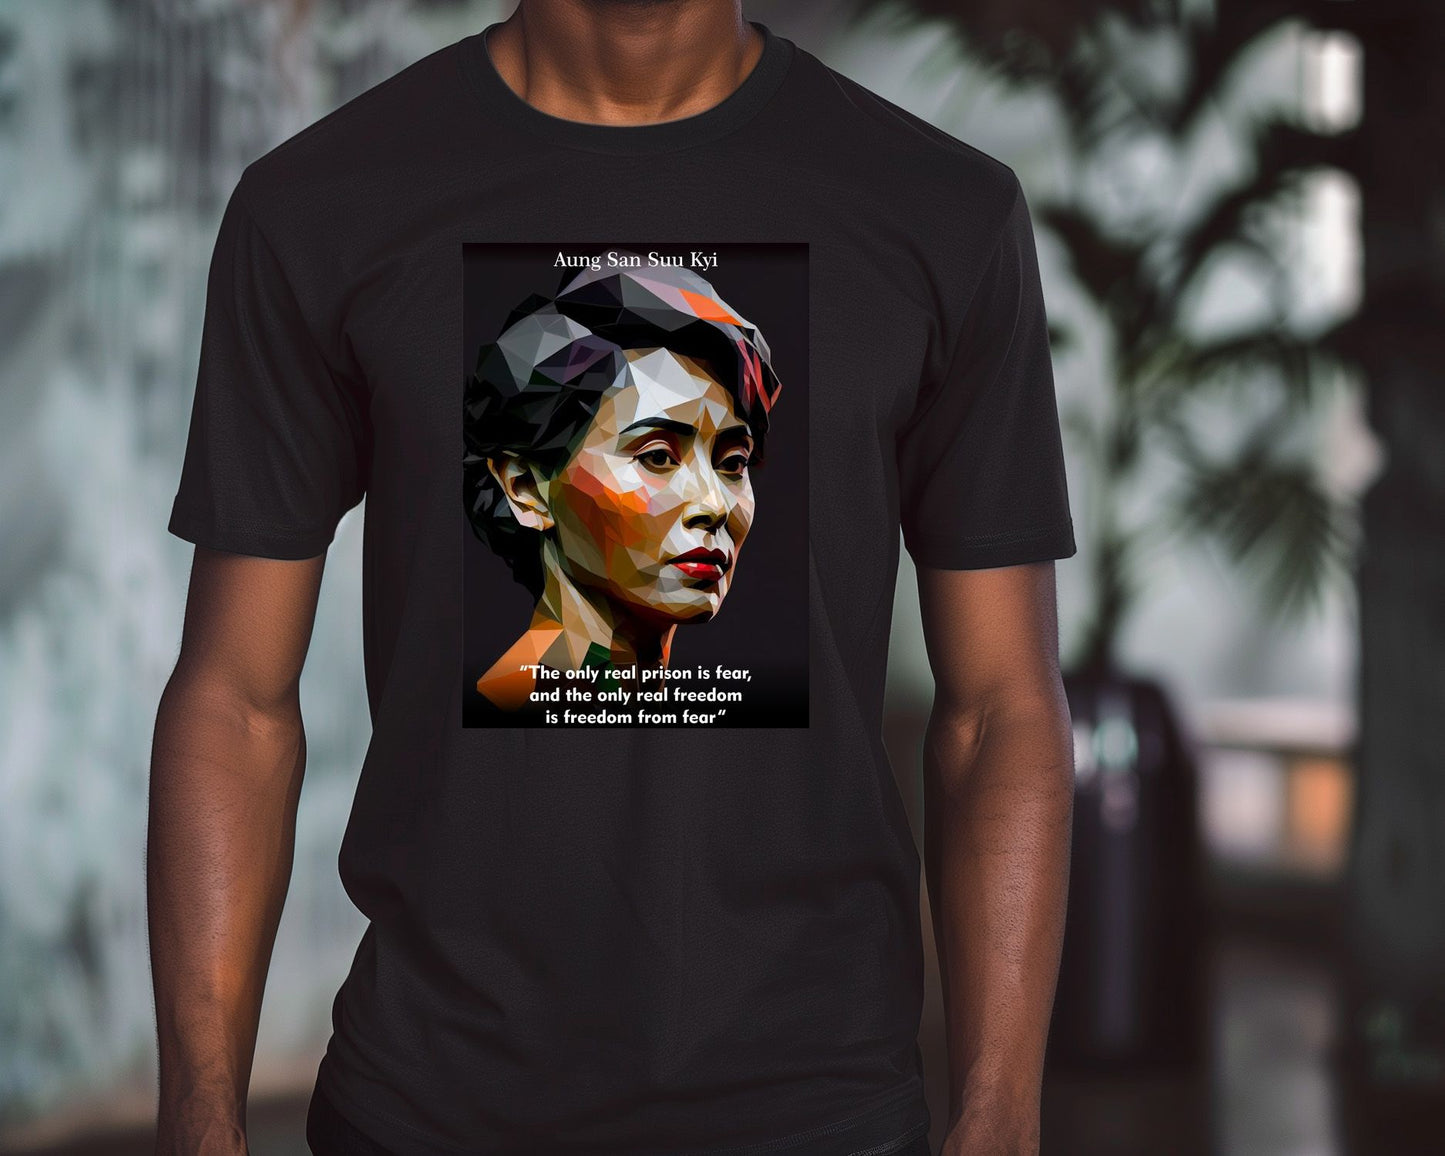 Aung San Suu Kyi Quotes - @WpapArtist